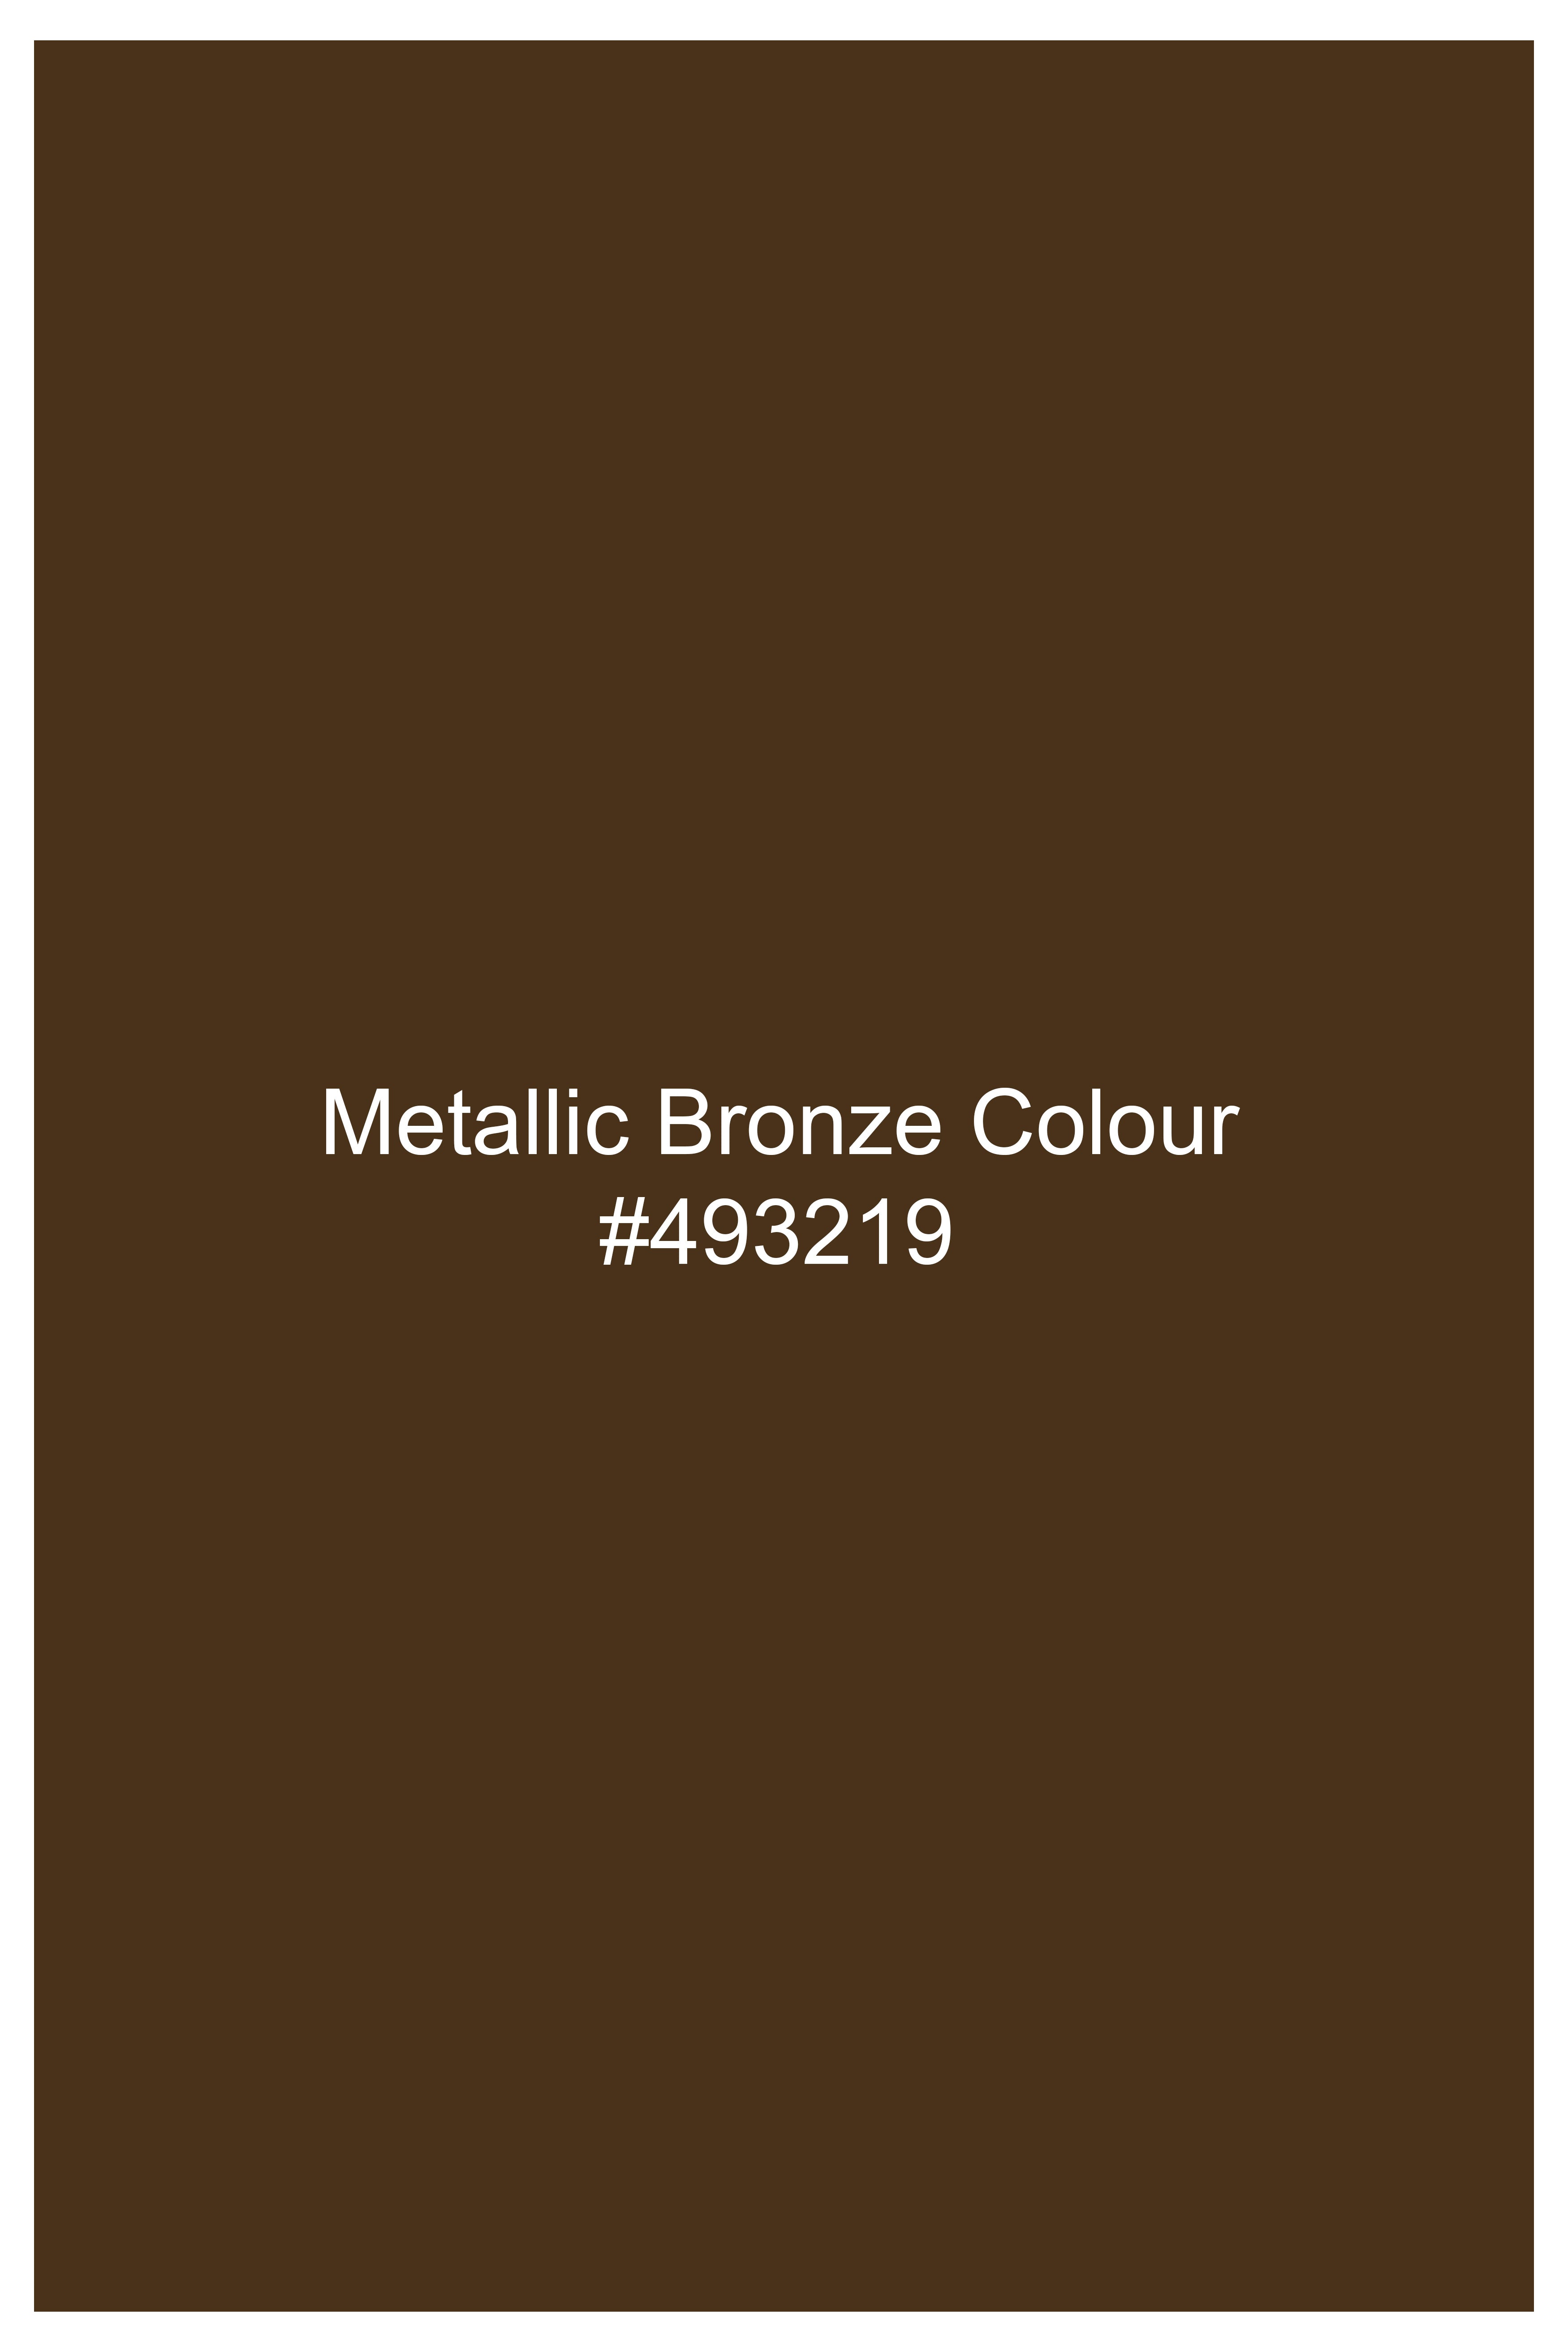 Metallic Bronze Brown Premium Cotton Bandhgala Stretchable Traveler Suit ST2780-BG-36,ST2780-BG-38,ST2780-BG-40,ST2780-BG-42,ST2780-BG-44,ST2780-BG-46,ST2780-BG-48,ST2780-BG-50,ST2780-BG-52,ST2780-BG-54,ST2780-BG-56,ST2780-BG-58,ST2780-BG-60